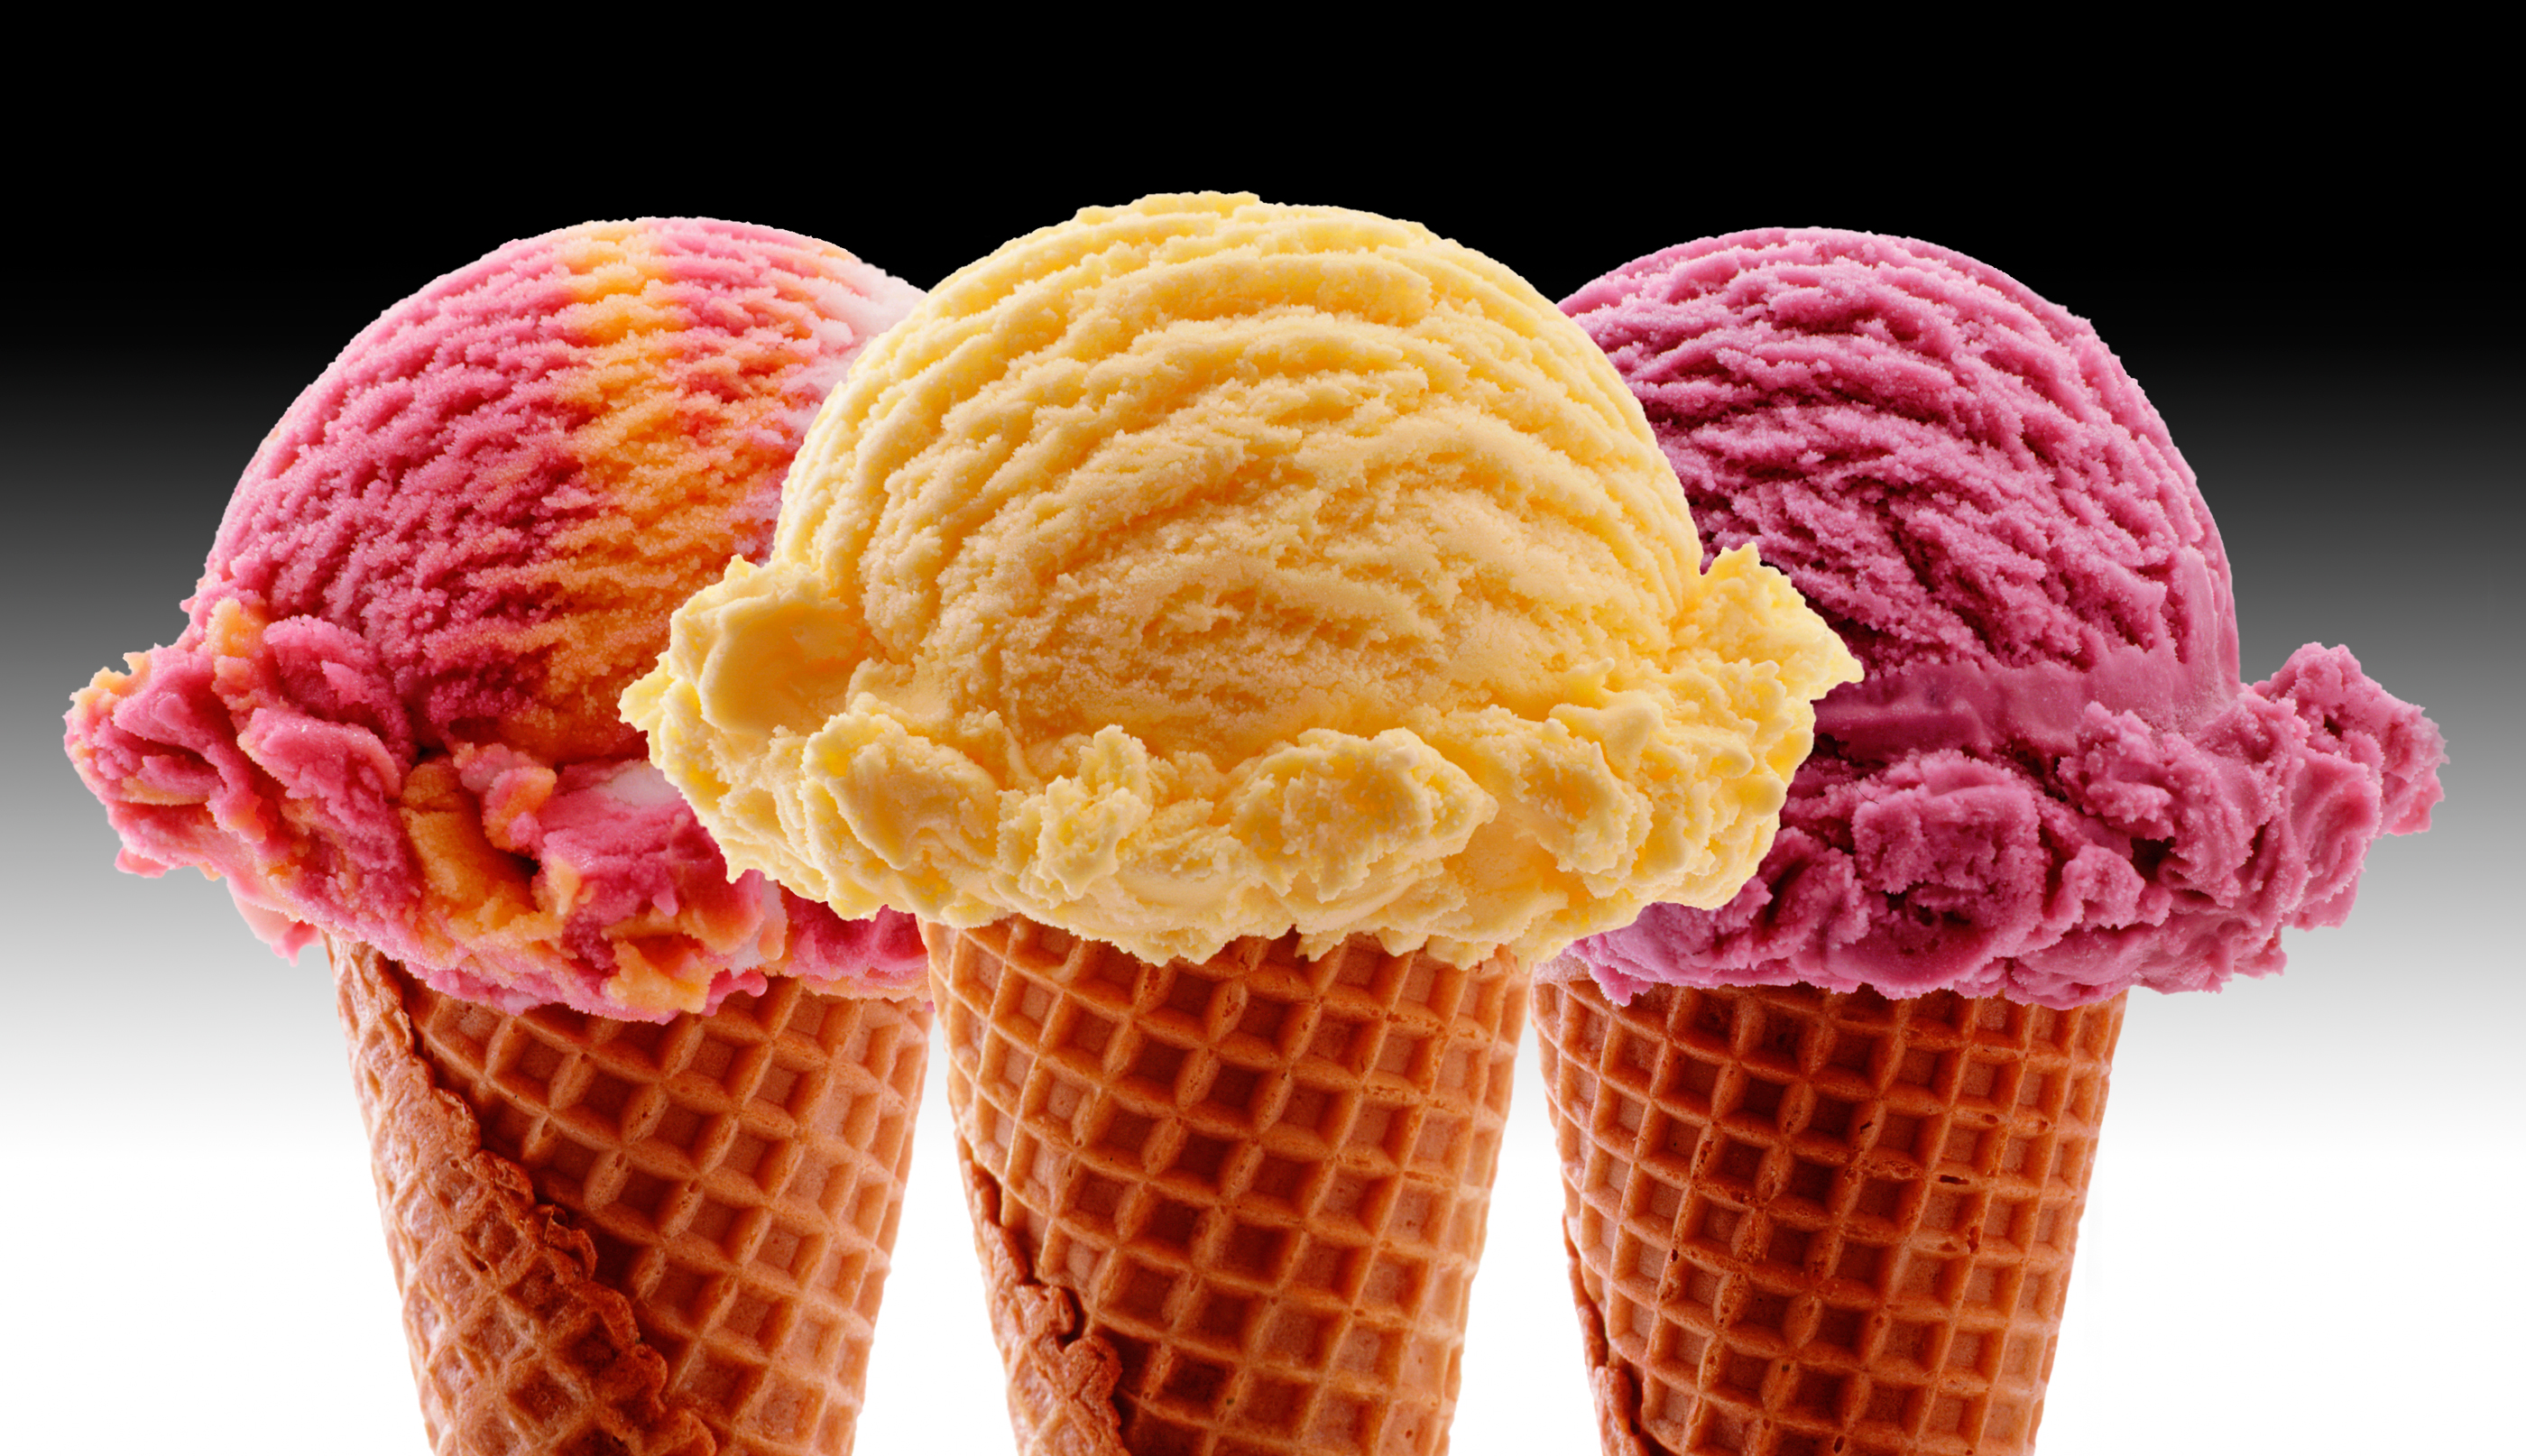 Ice cream cones |Dovis Bird Agency Reps